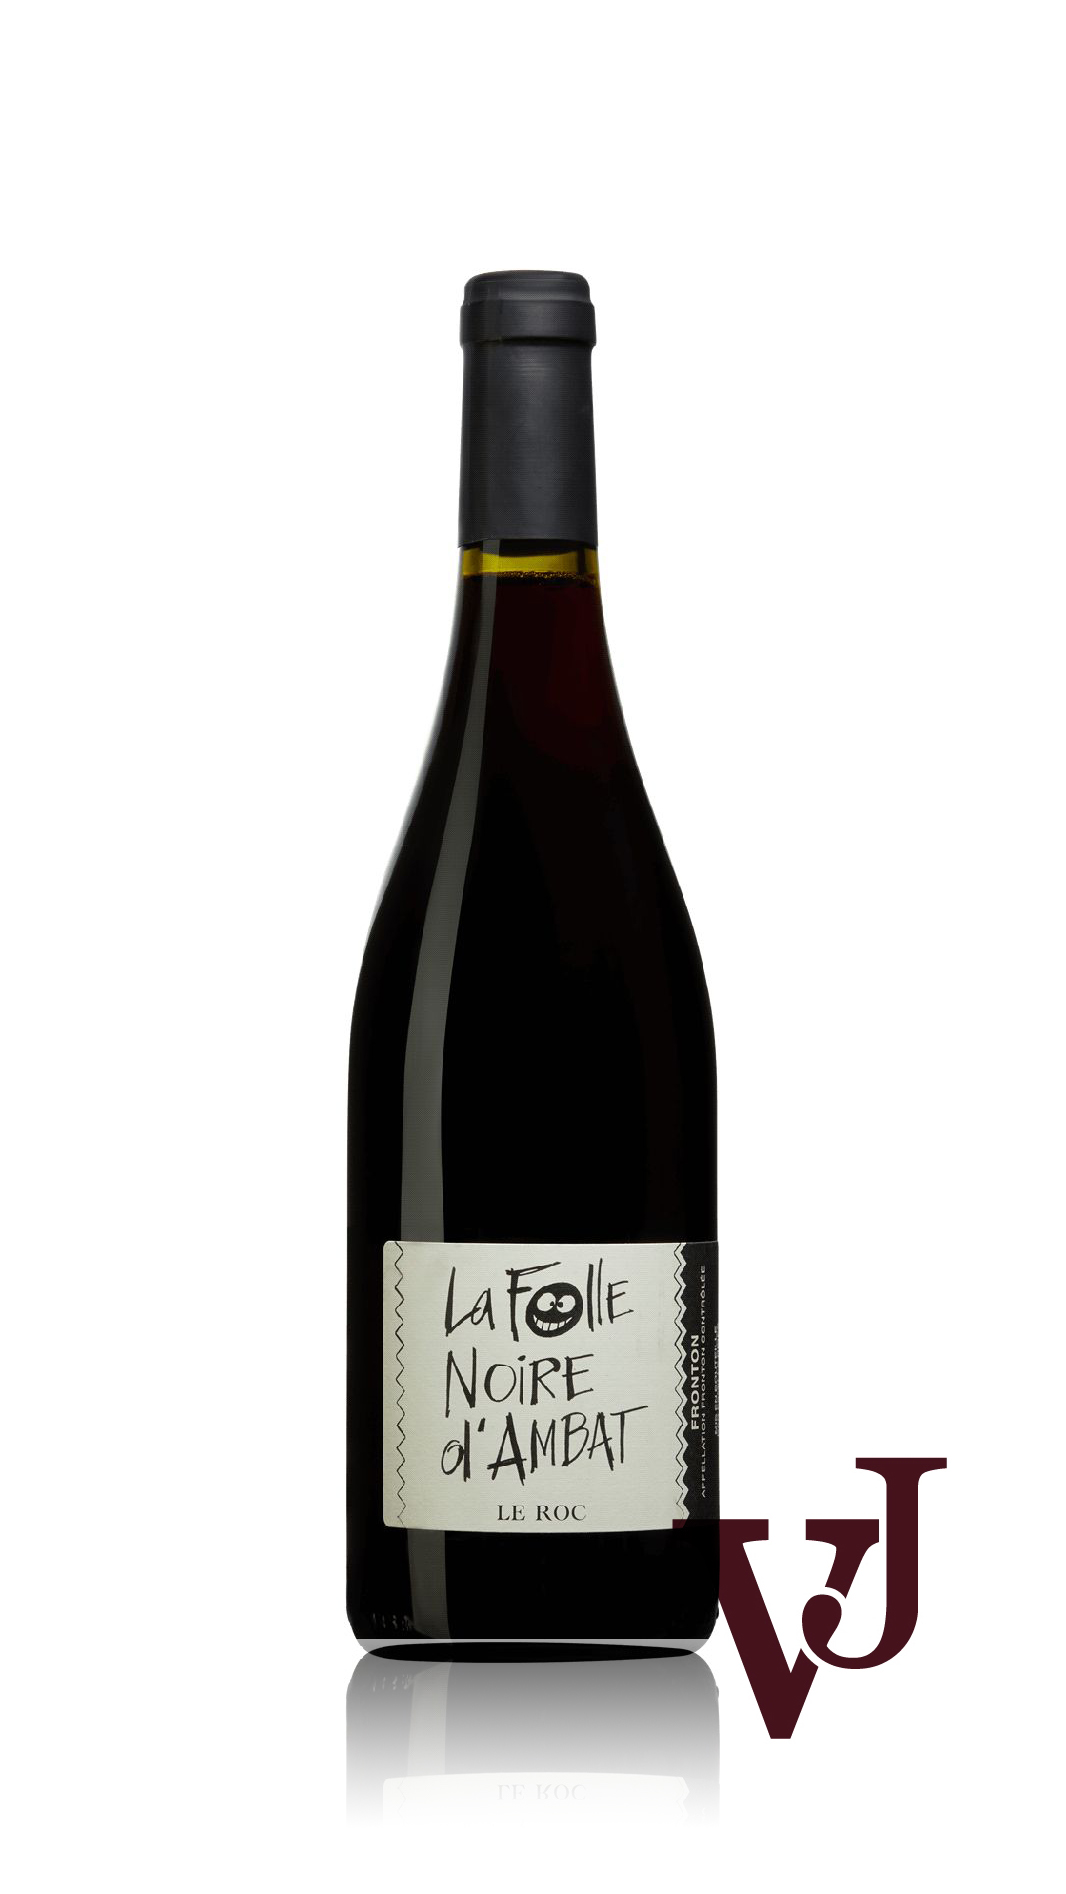 Rött vin - La Folle Noire d'Ambat Le Roc 2021 artikel nummer 9374801 från producenten Le Roc från Frankrike